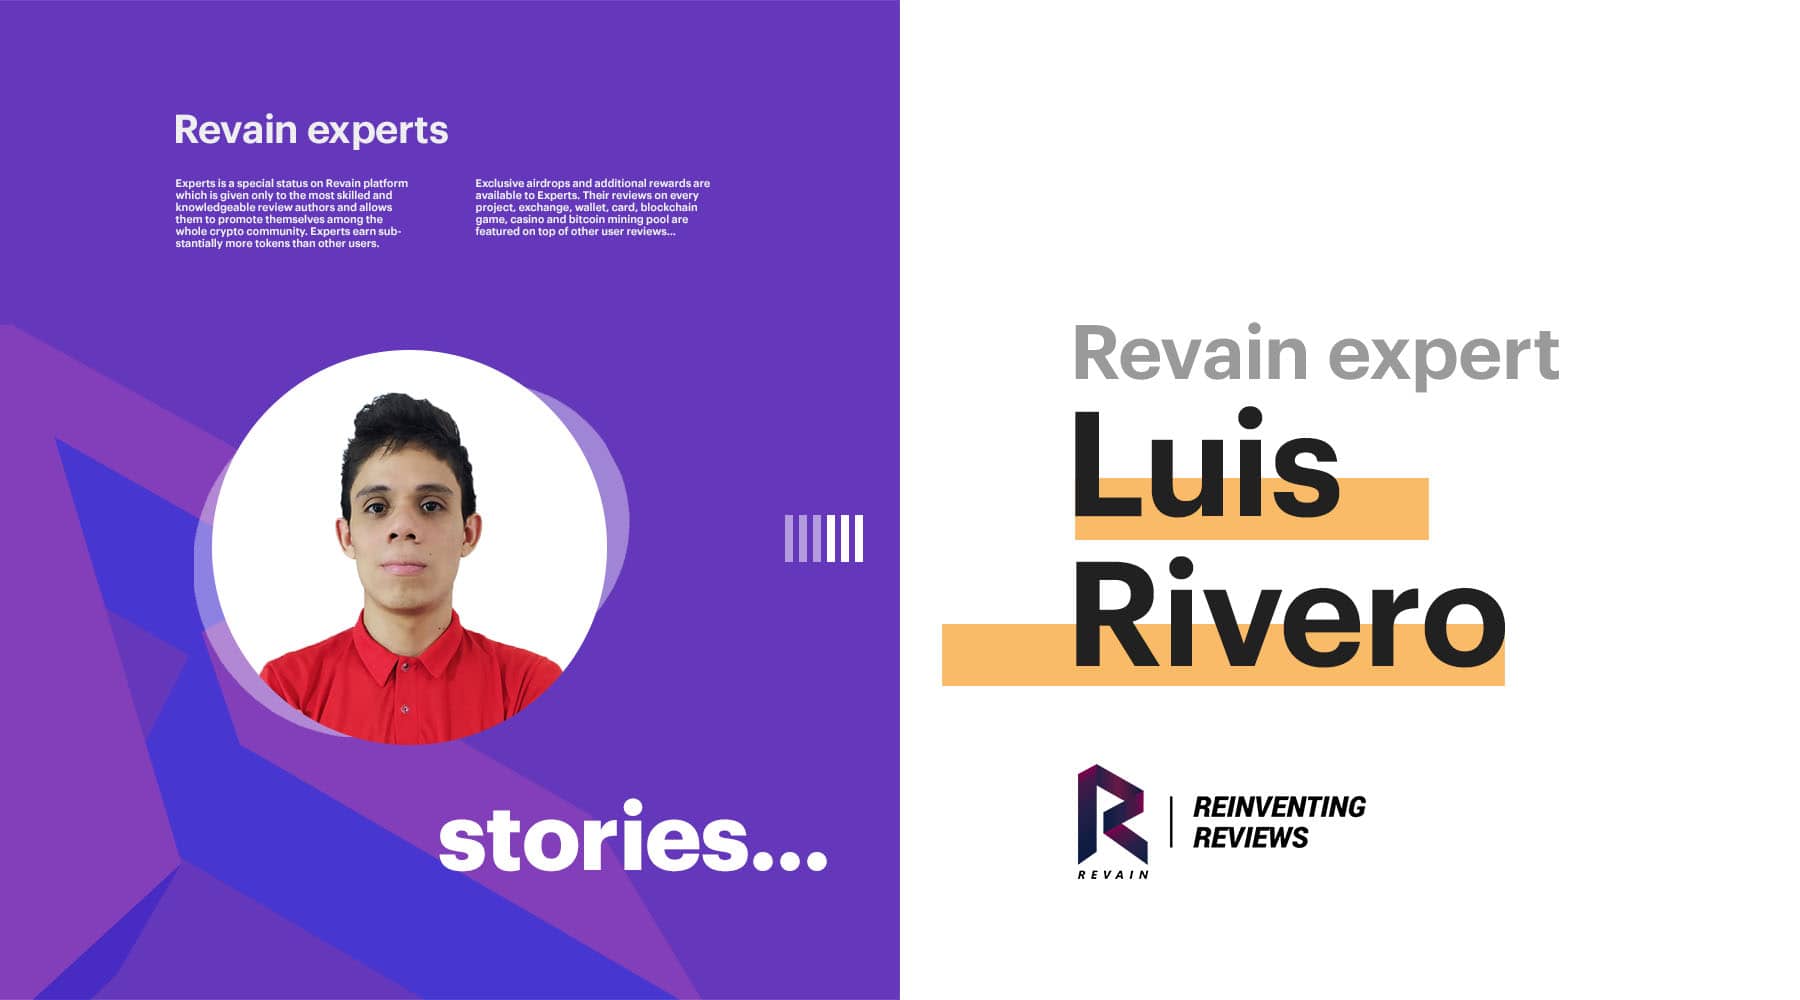 Luis Rivero's story